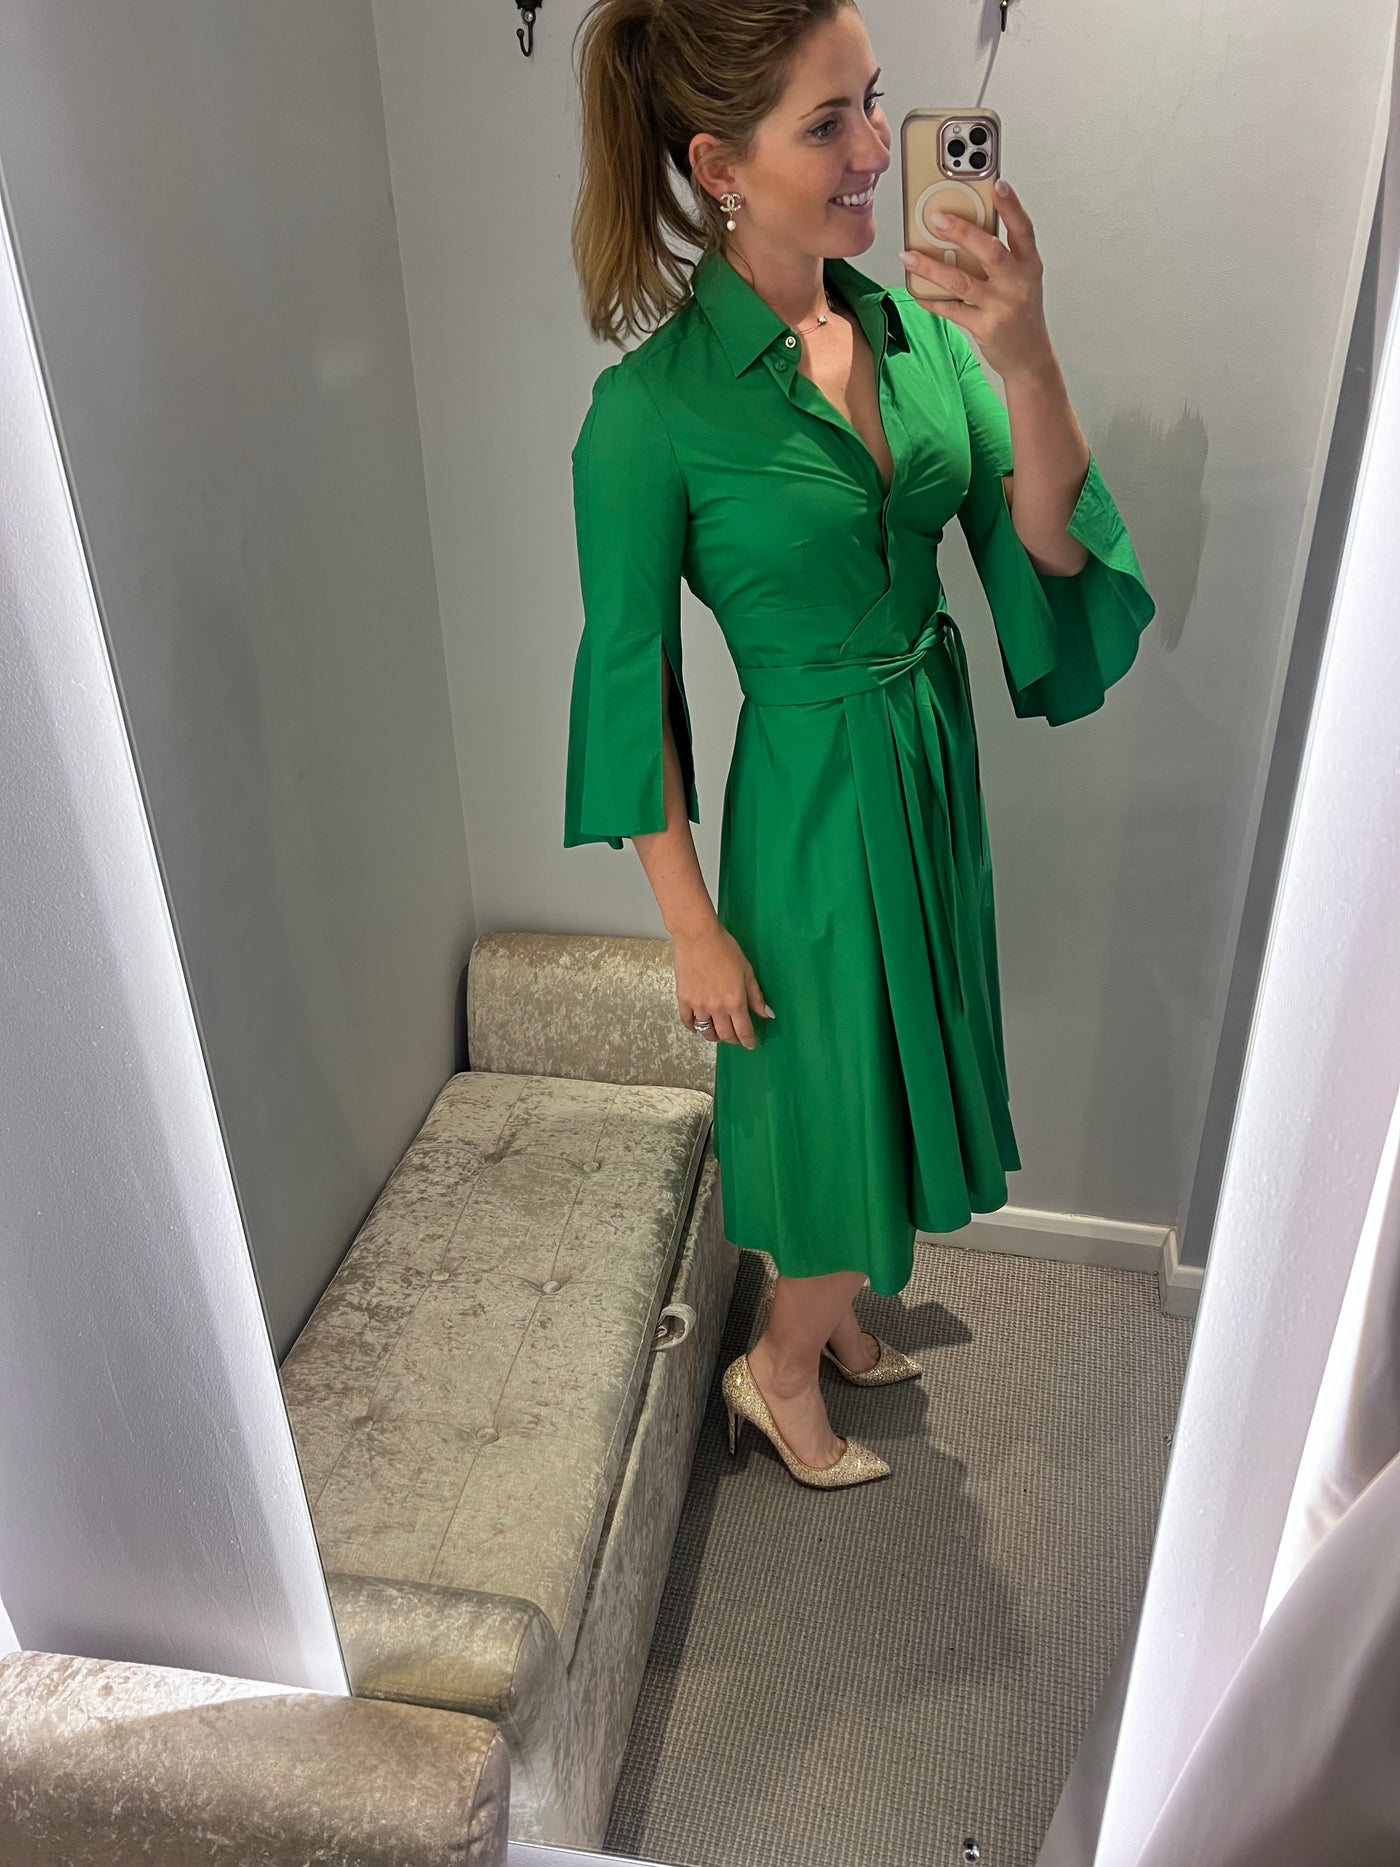 Brand new Paule ka green dress size 38